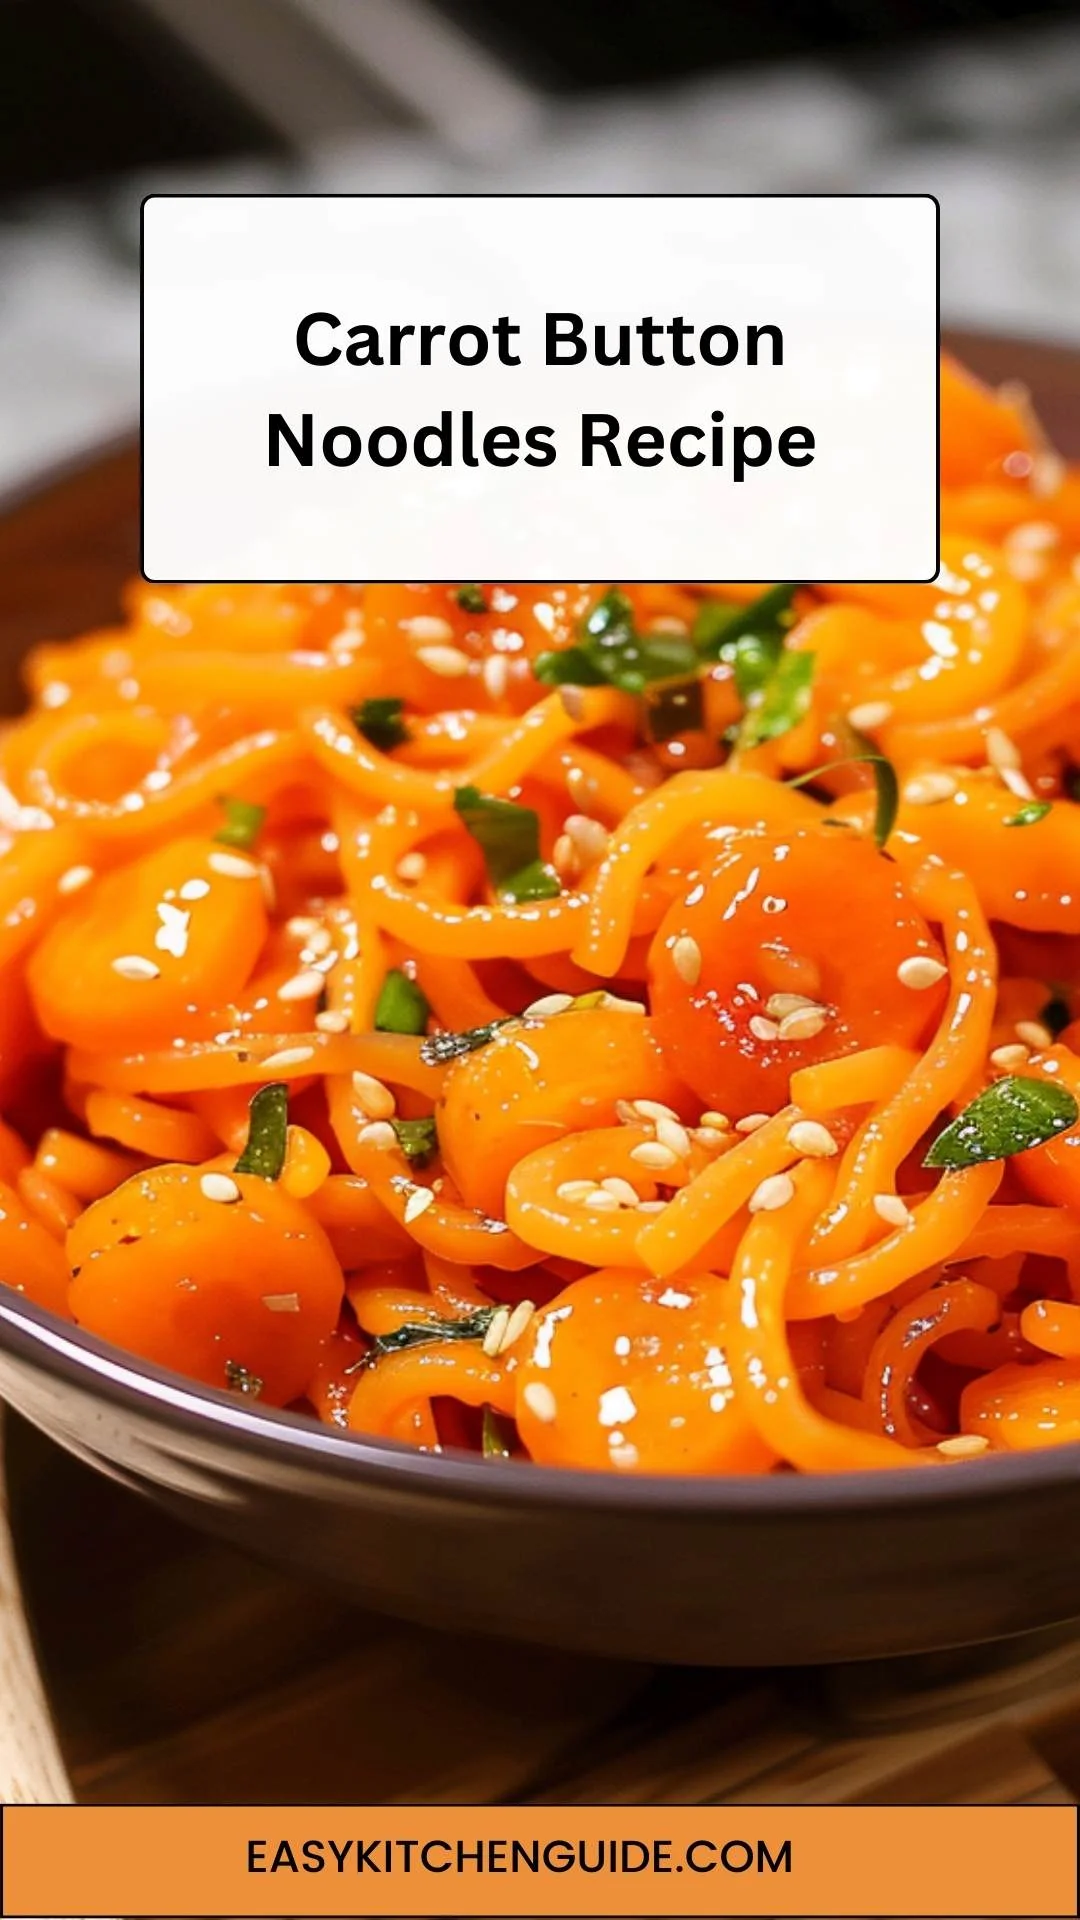 Carrot Button Noodles Recipe